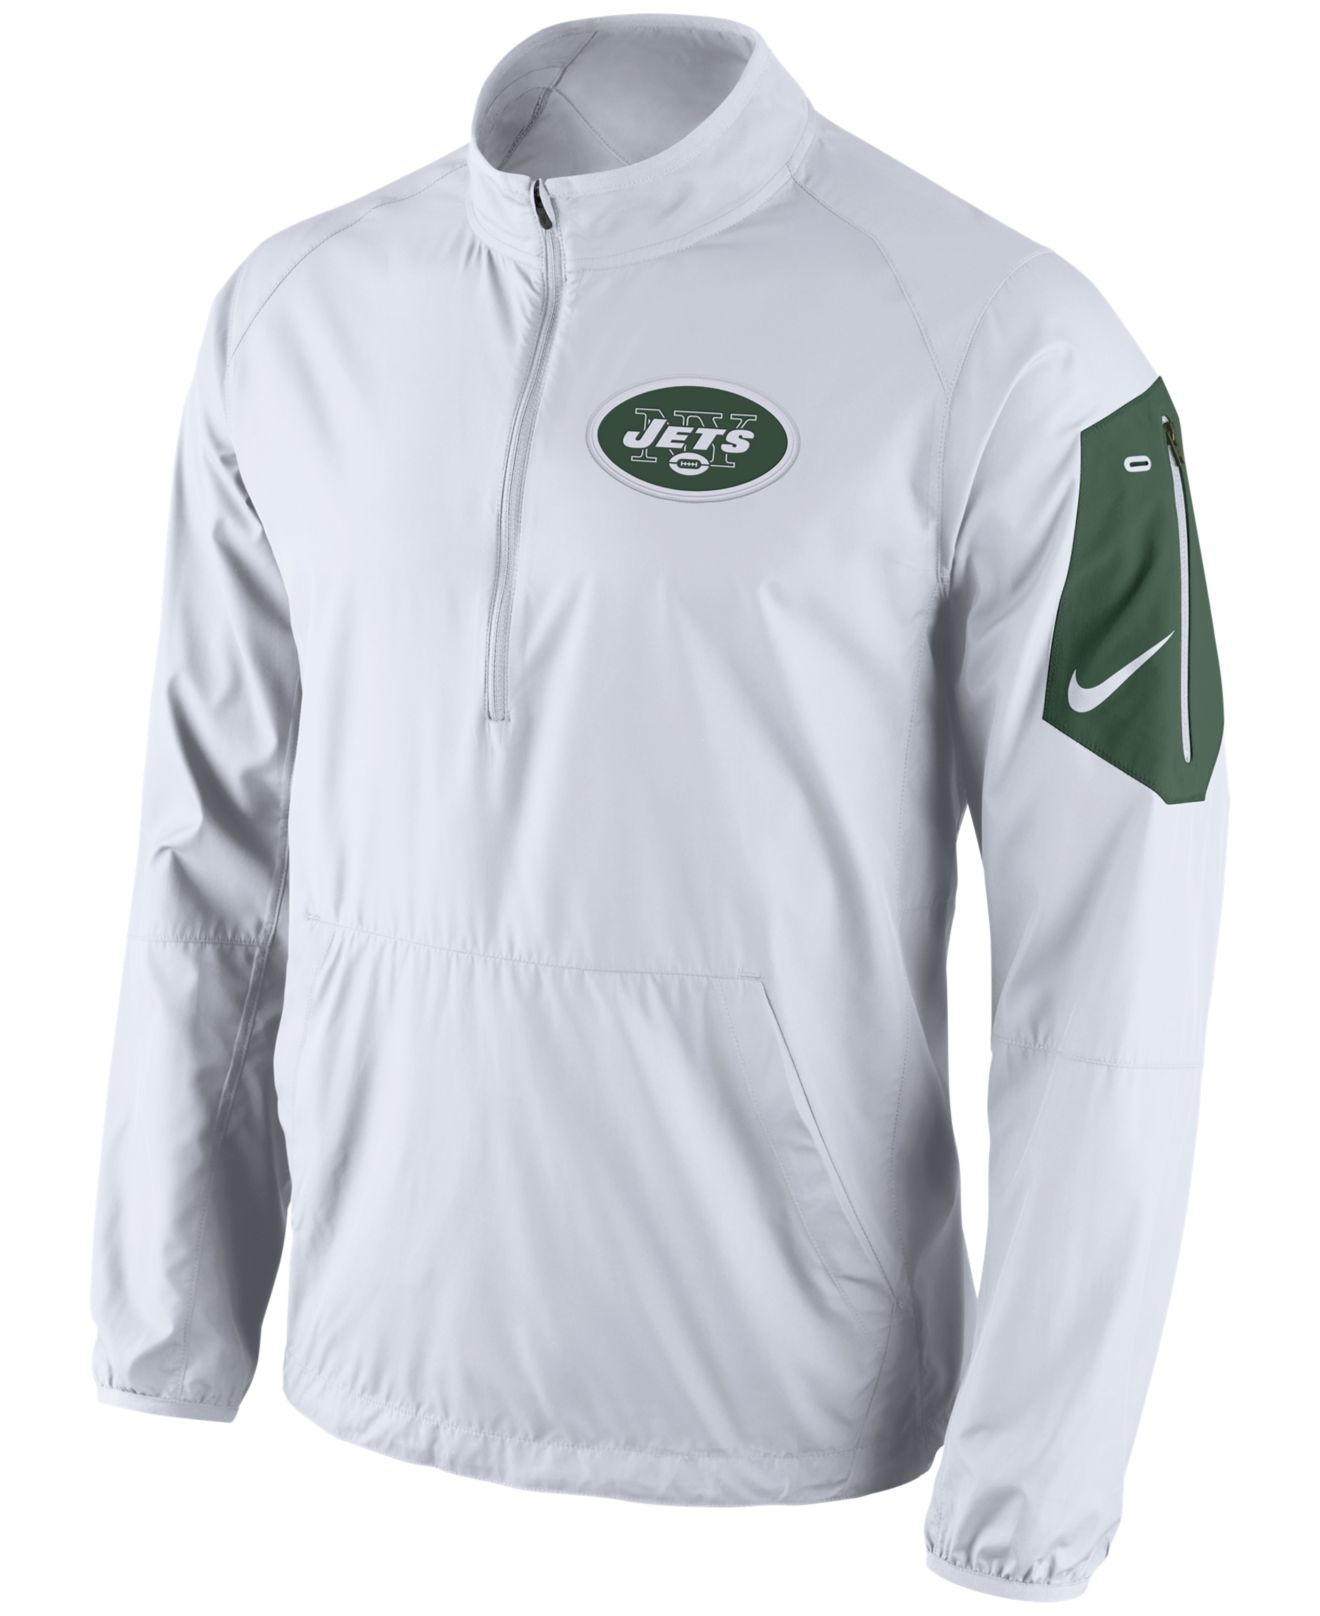 Lyst - Nike Men's New York Jets Lockdown Half-zip Jacket in White for Men